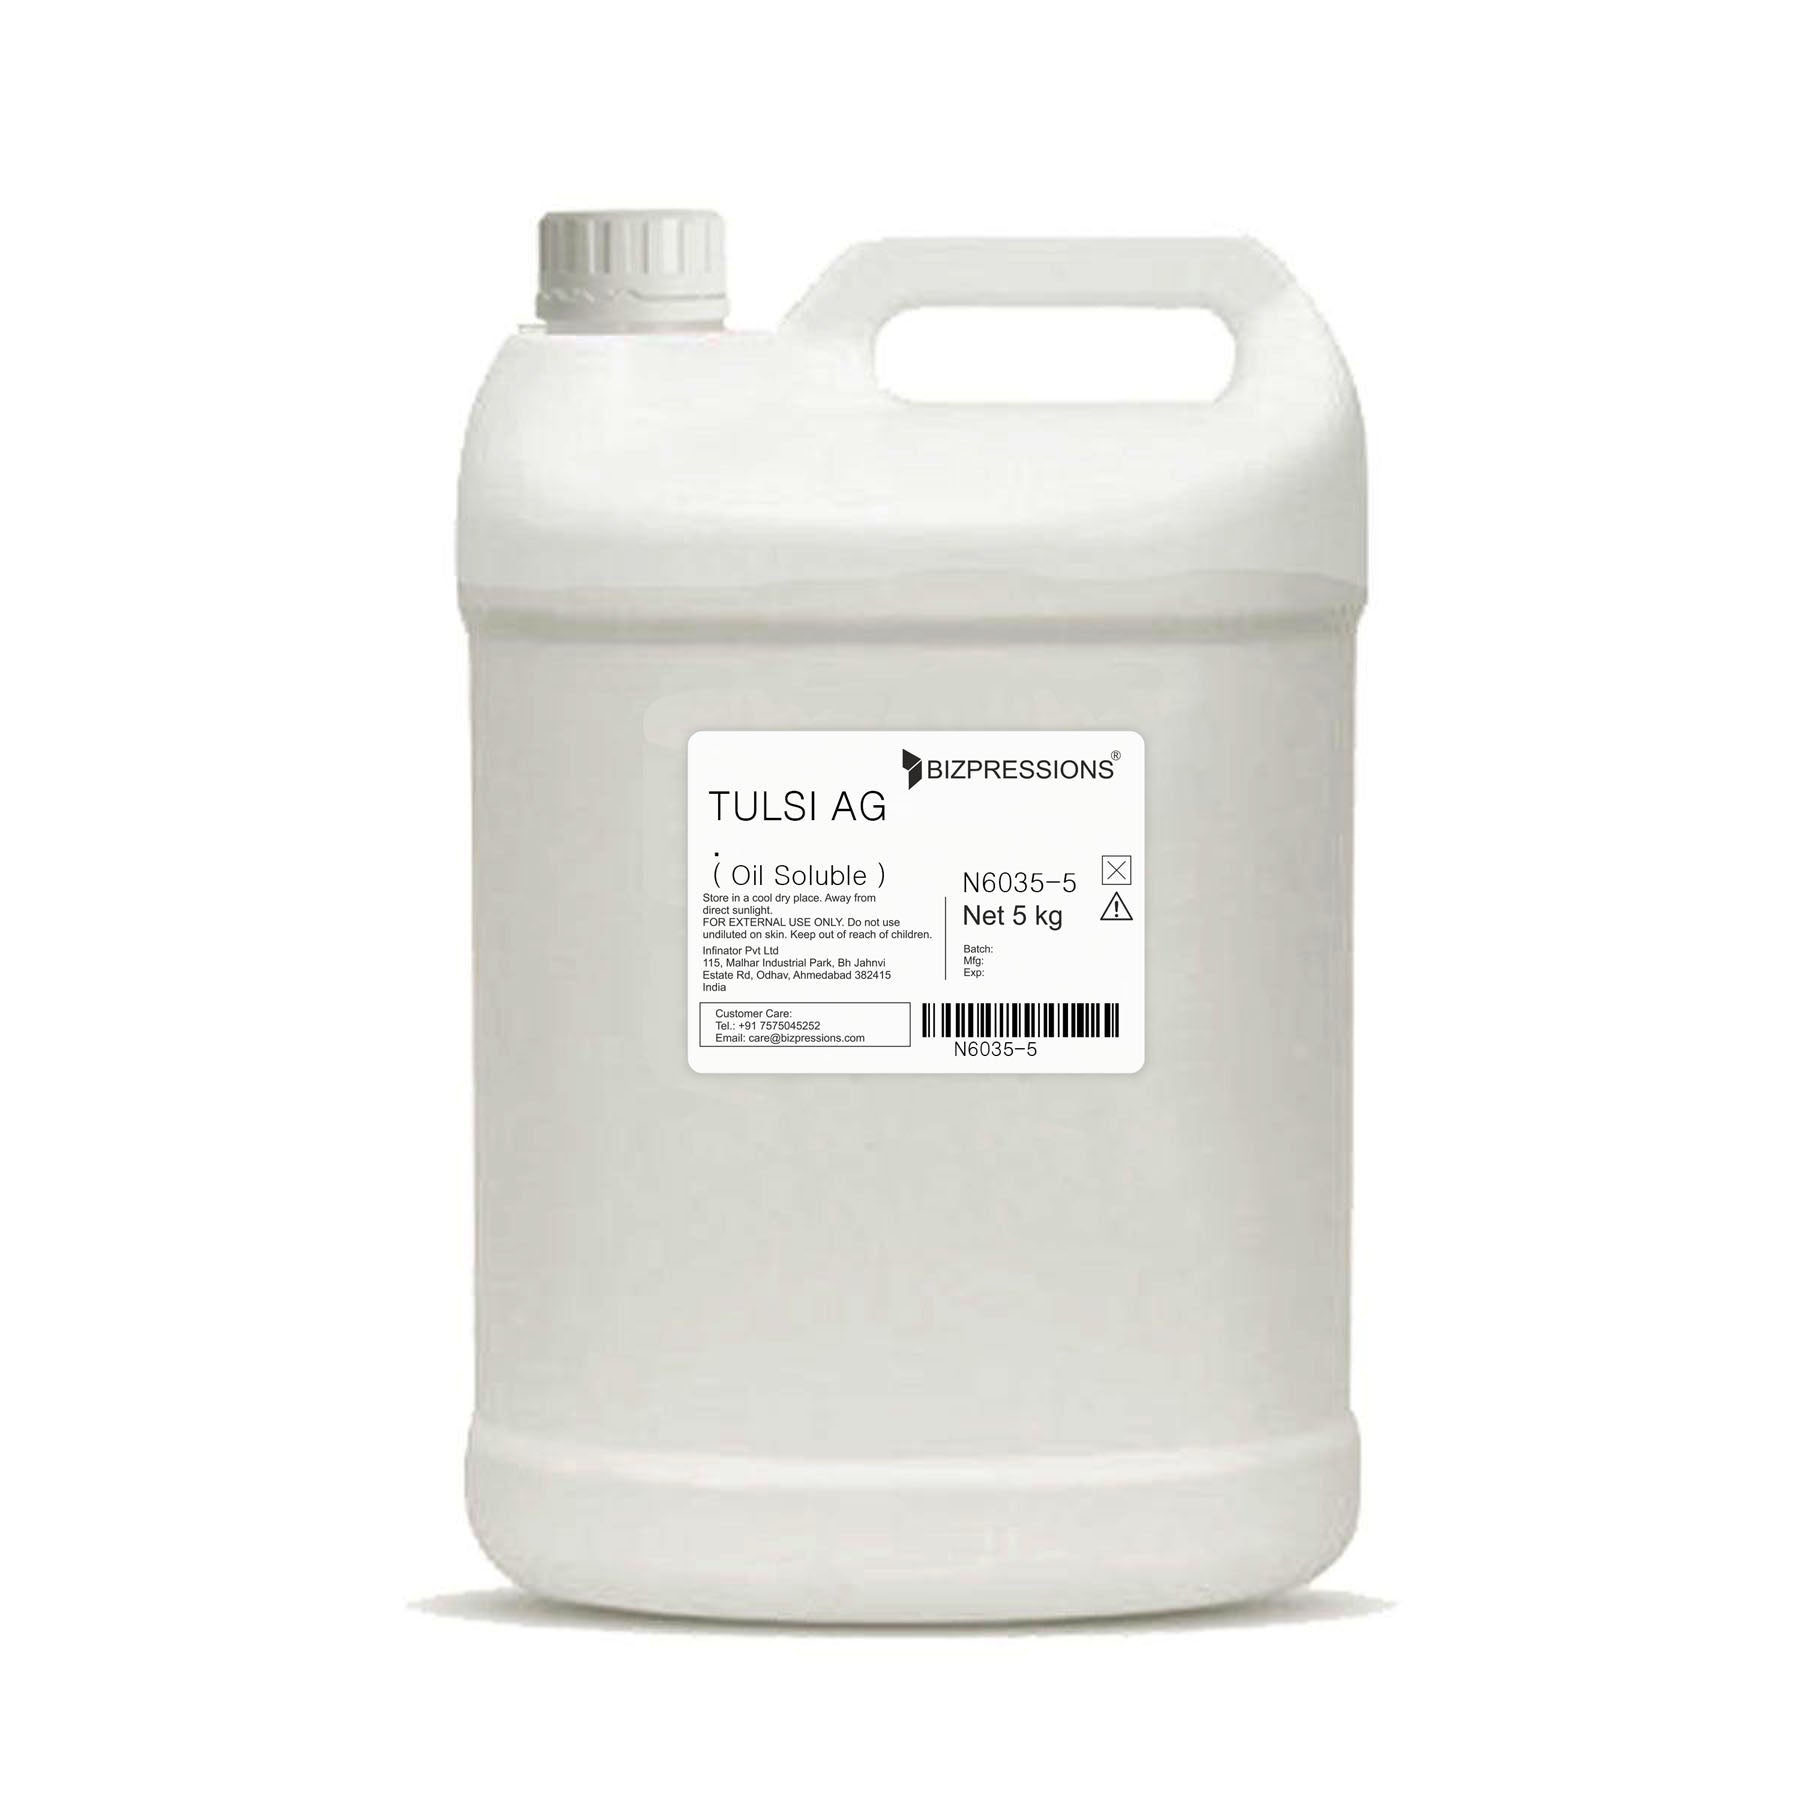 TULSI AG - Fragrance ( Oil Soluble ) - 5 kg